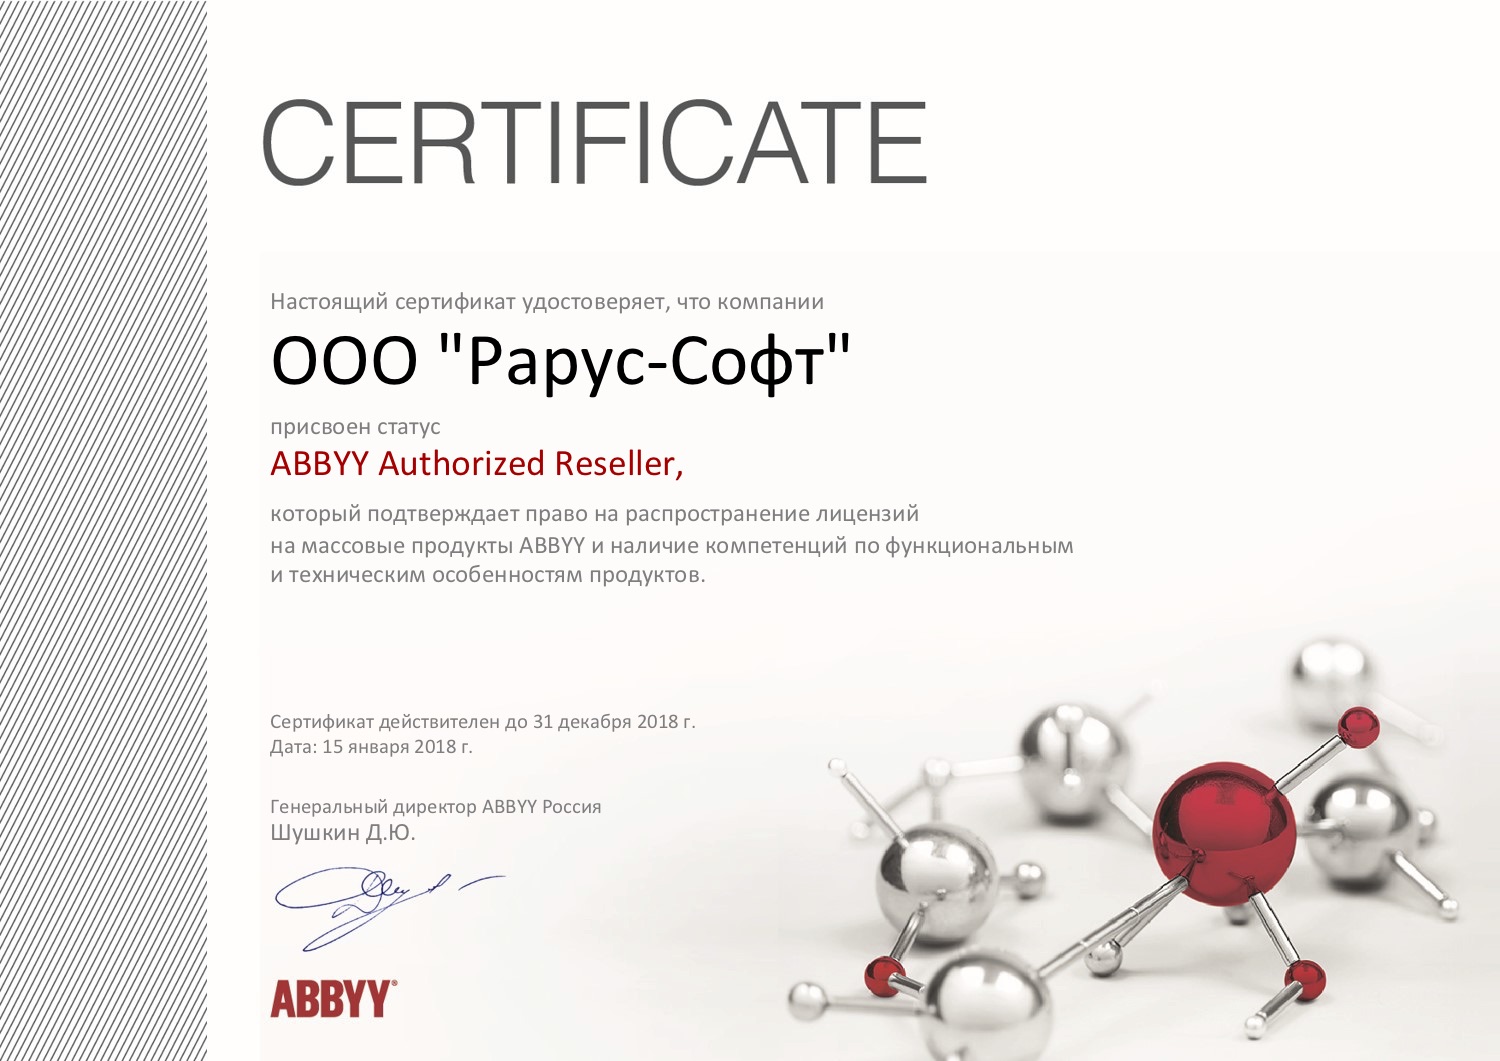 Сертификат о присвоении статуса ABBYY Distributor 2018